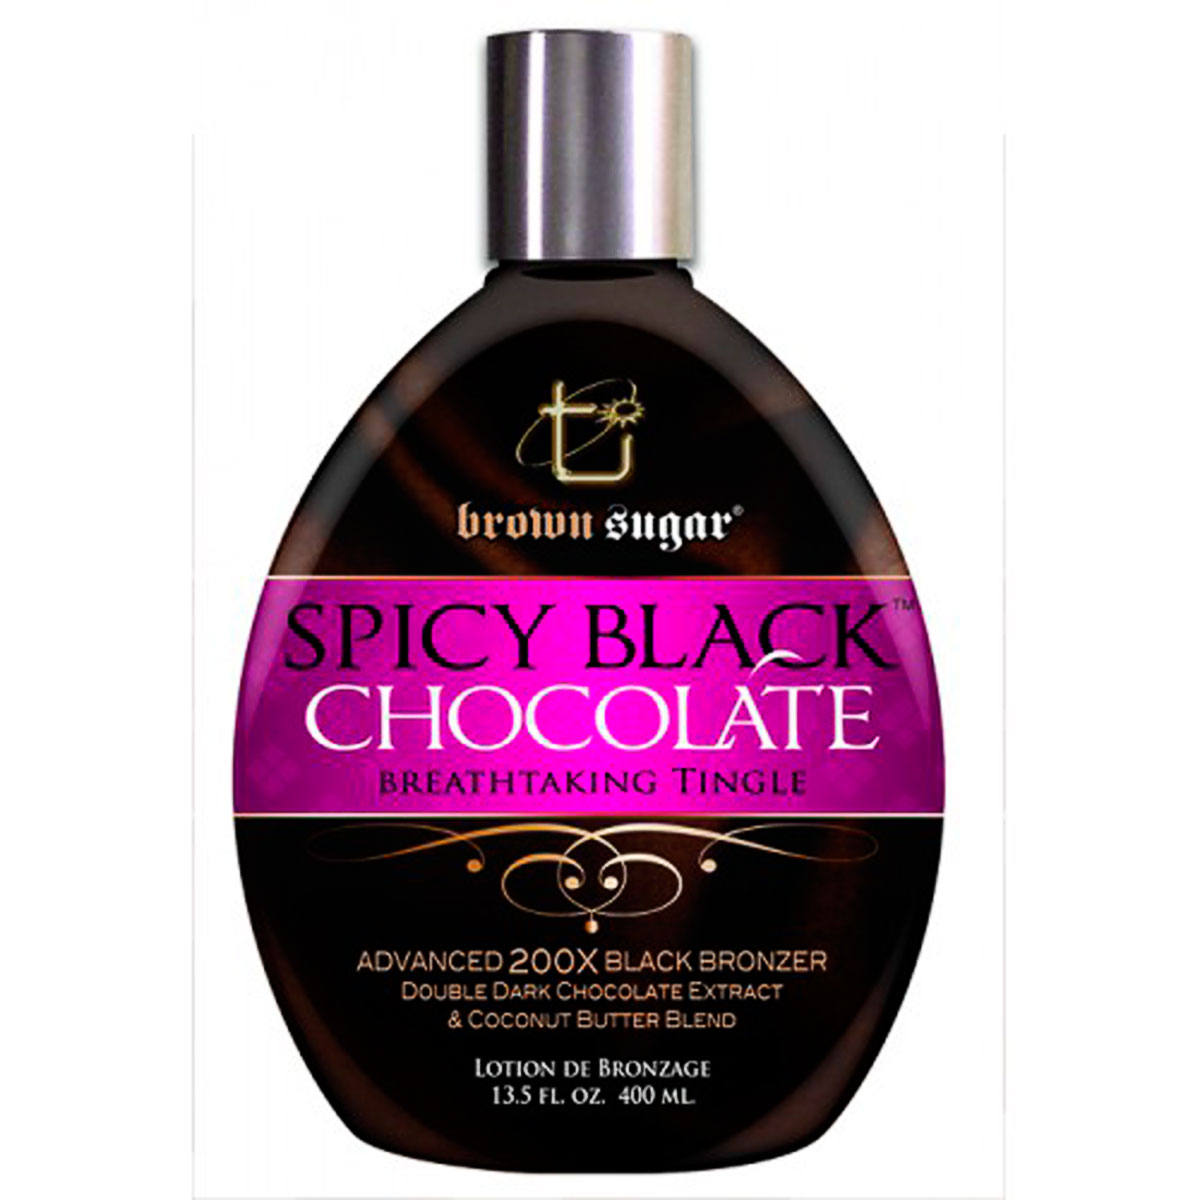 Spicy Black Chocolate 200Х Bronzer Tingle